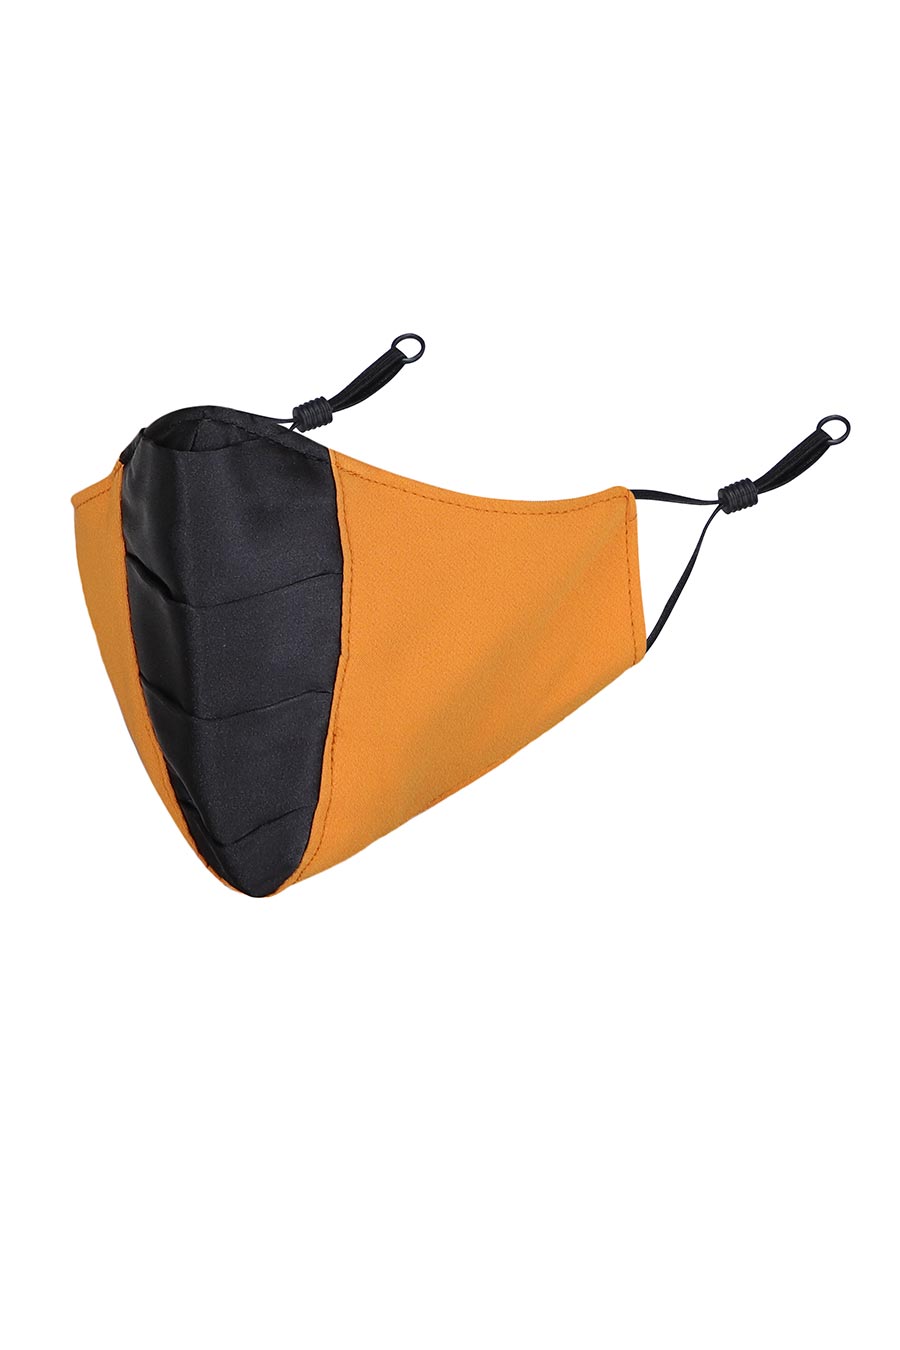 Orange & Black 3 Ply Mask